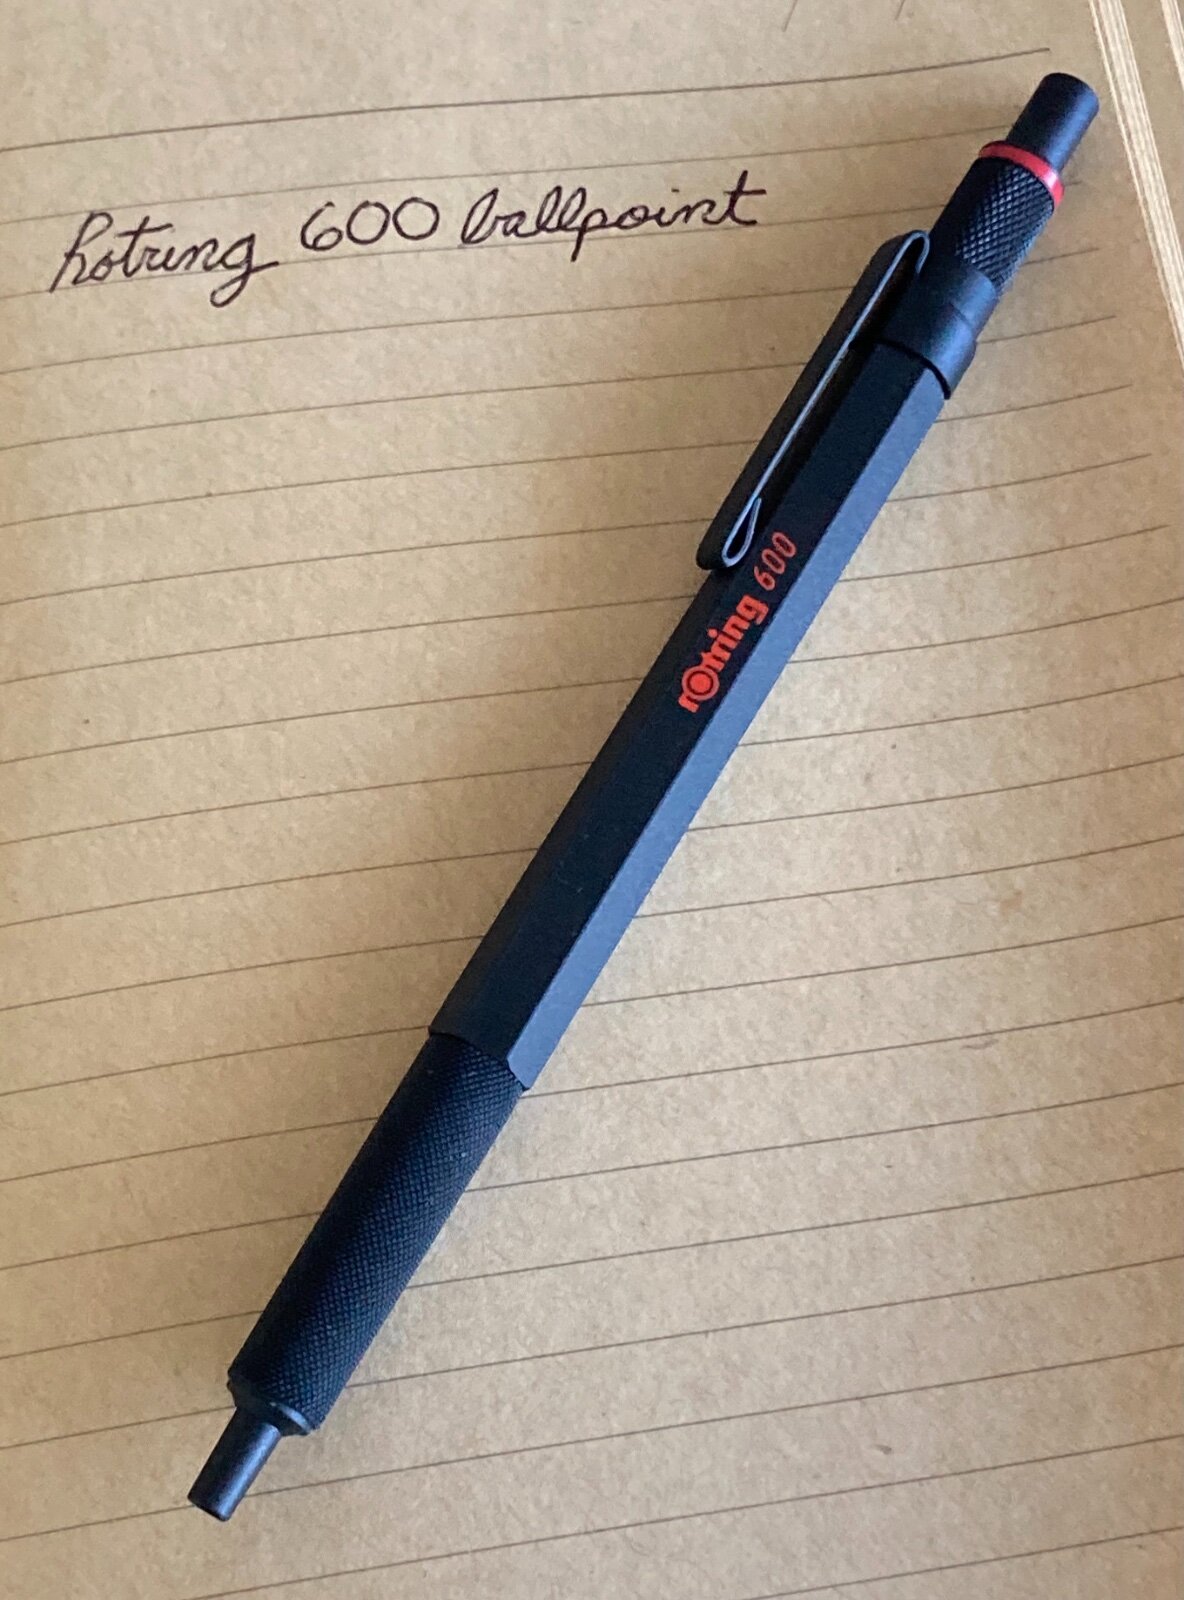 Rotring 600 ballpoint pen - It Writes, But It Is Not A Fountain Pen . -  The Fountain Pen Network